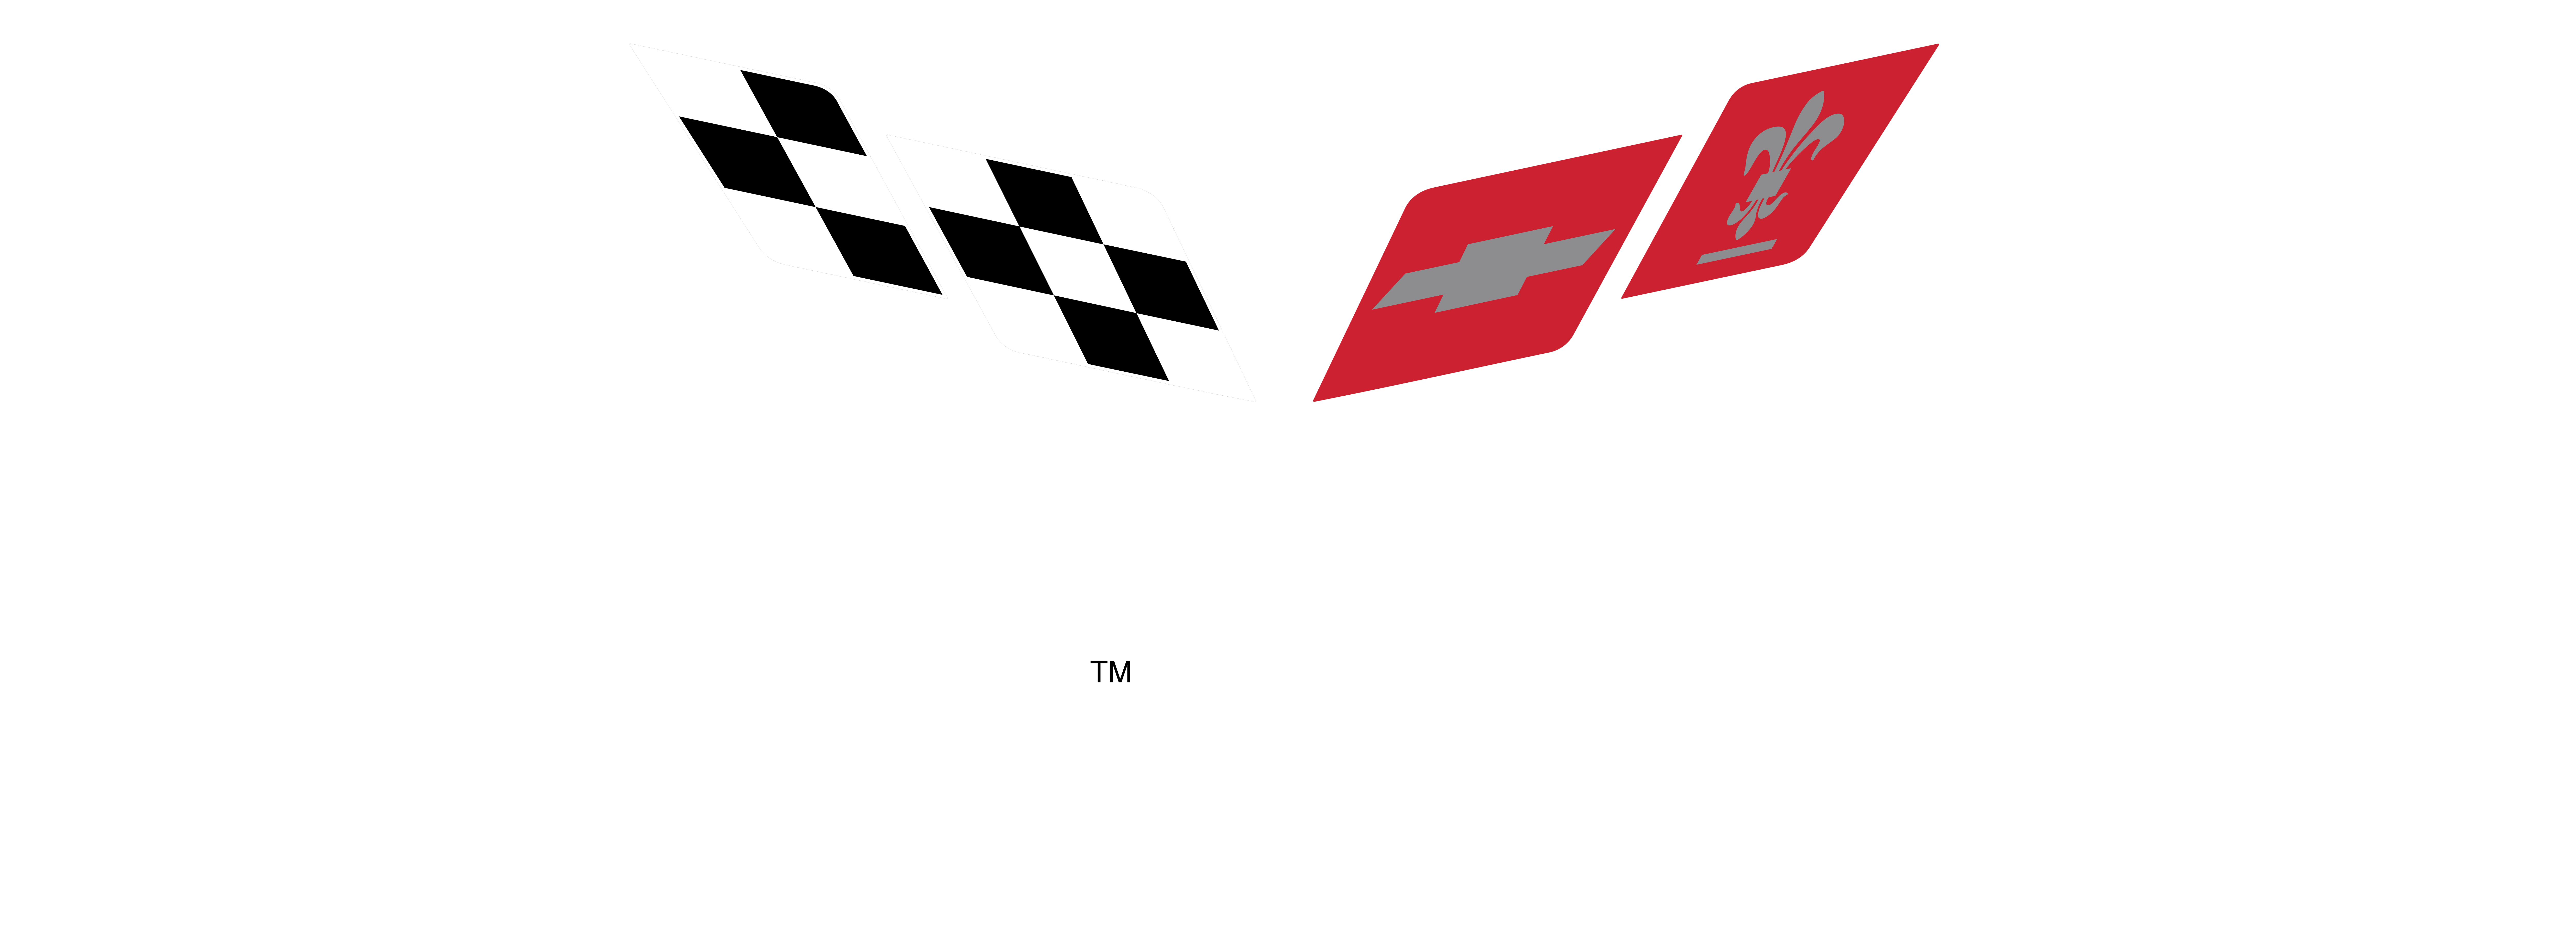 Logo de Chevrolet 